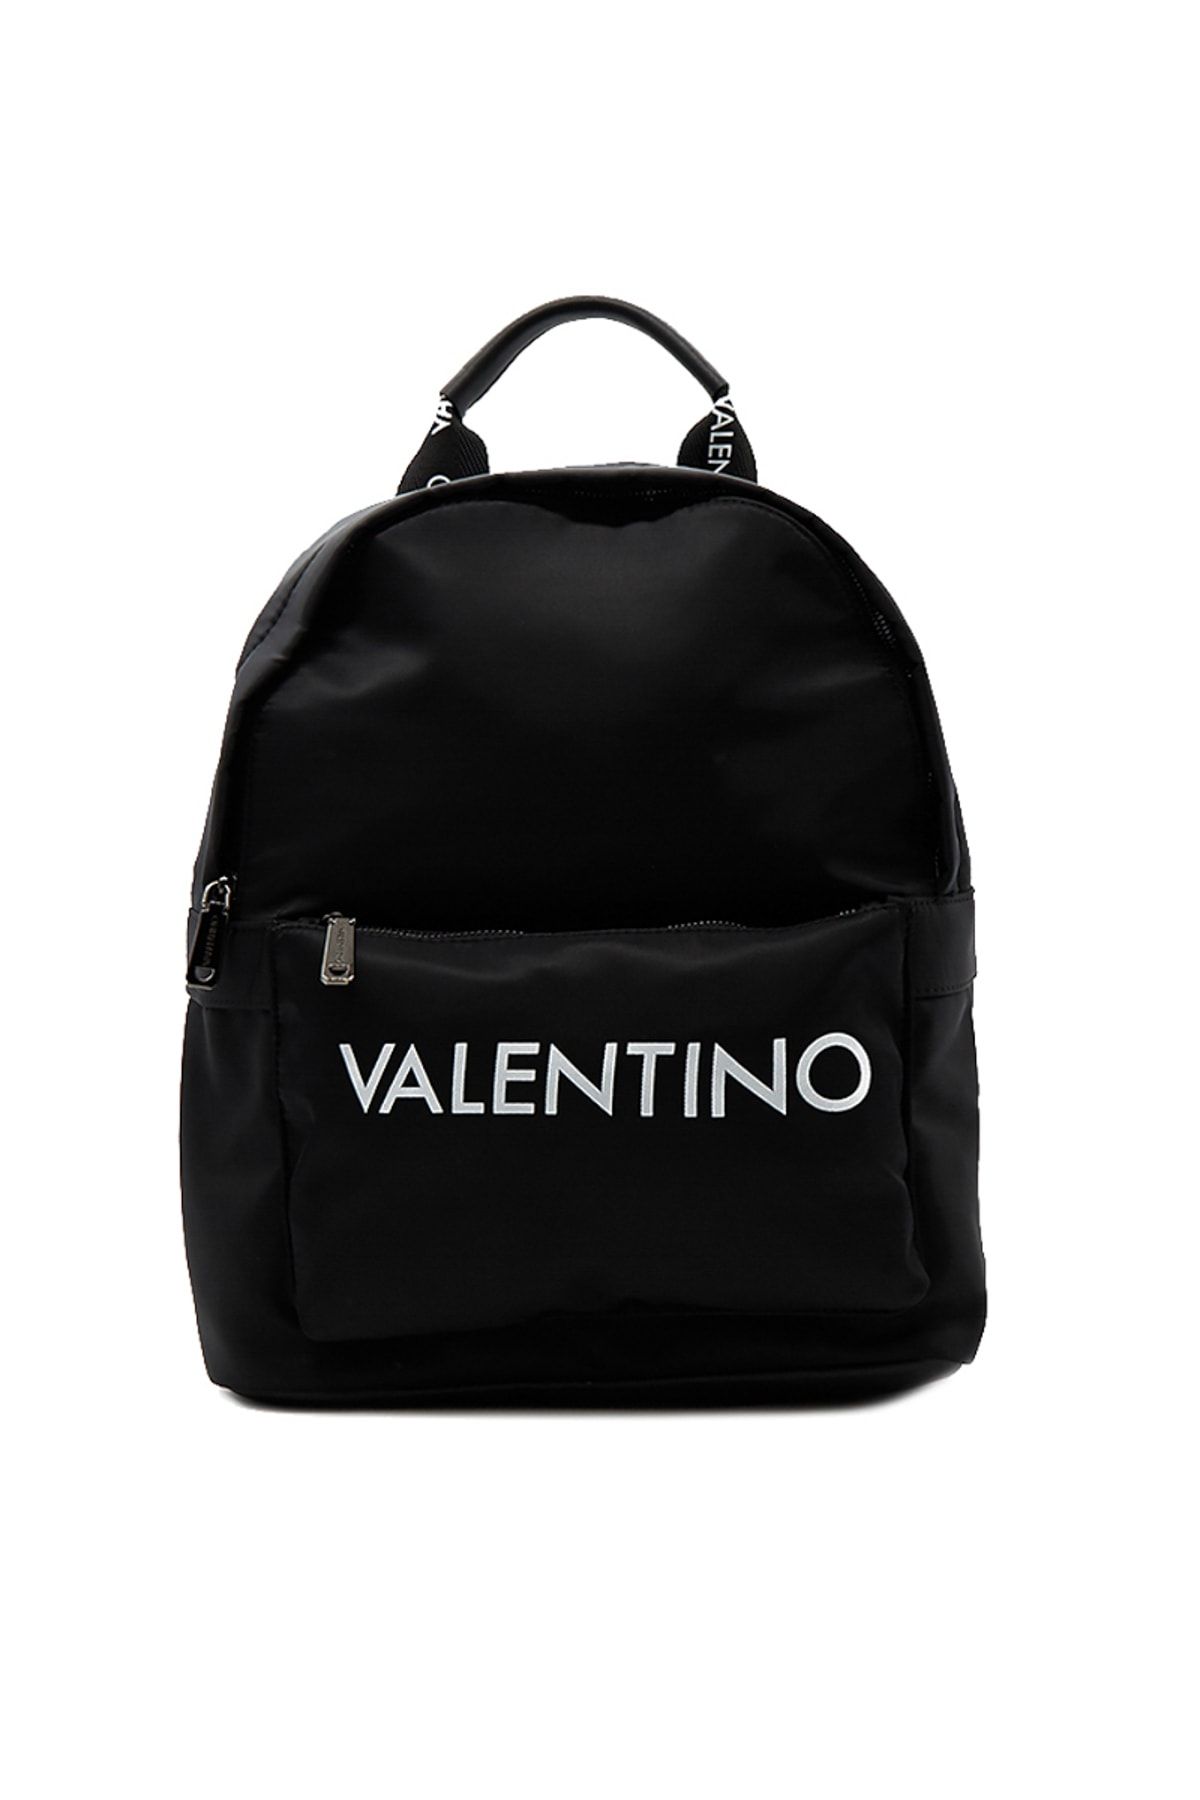 Mario Valentino Backpack - Black - Slogan - Trendyol